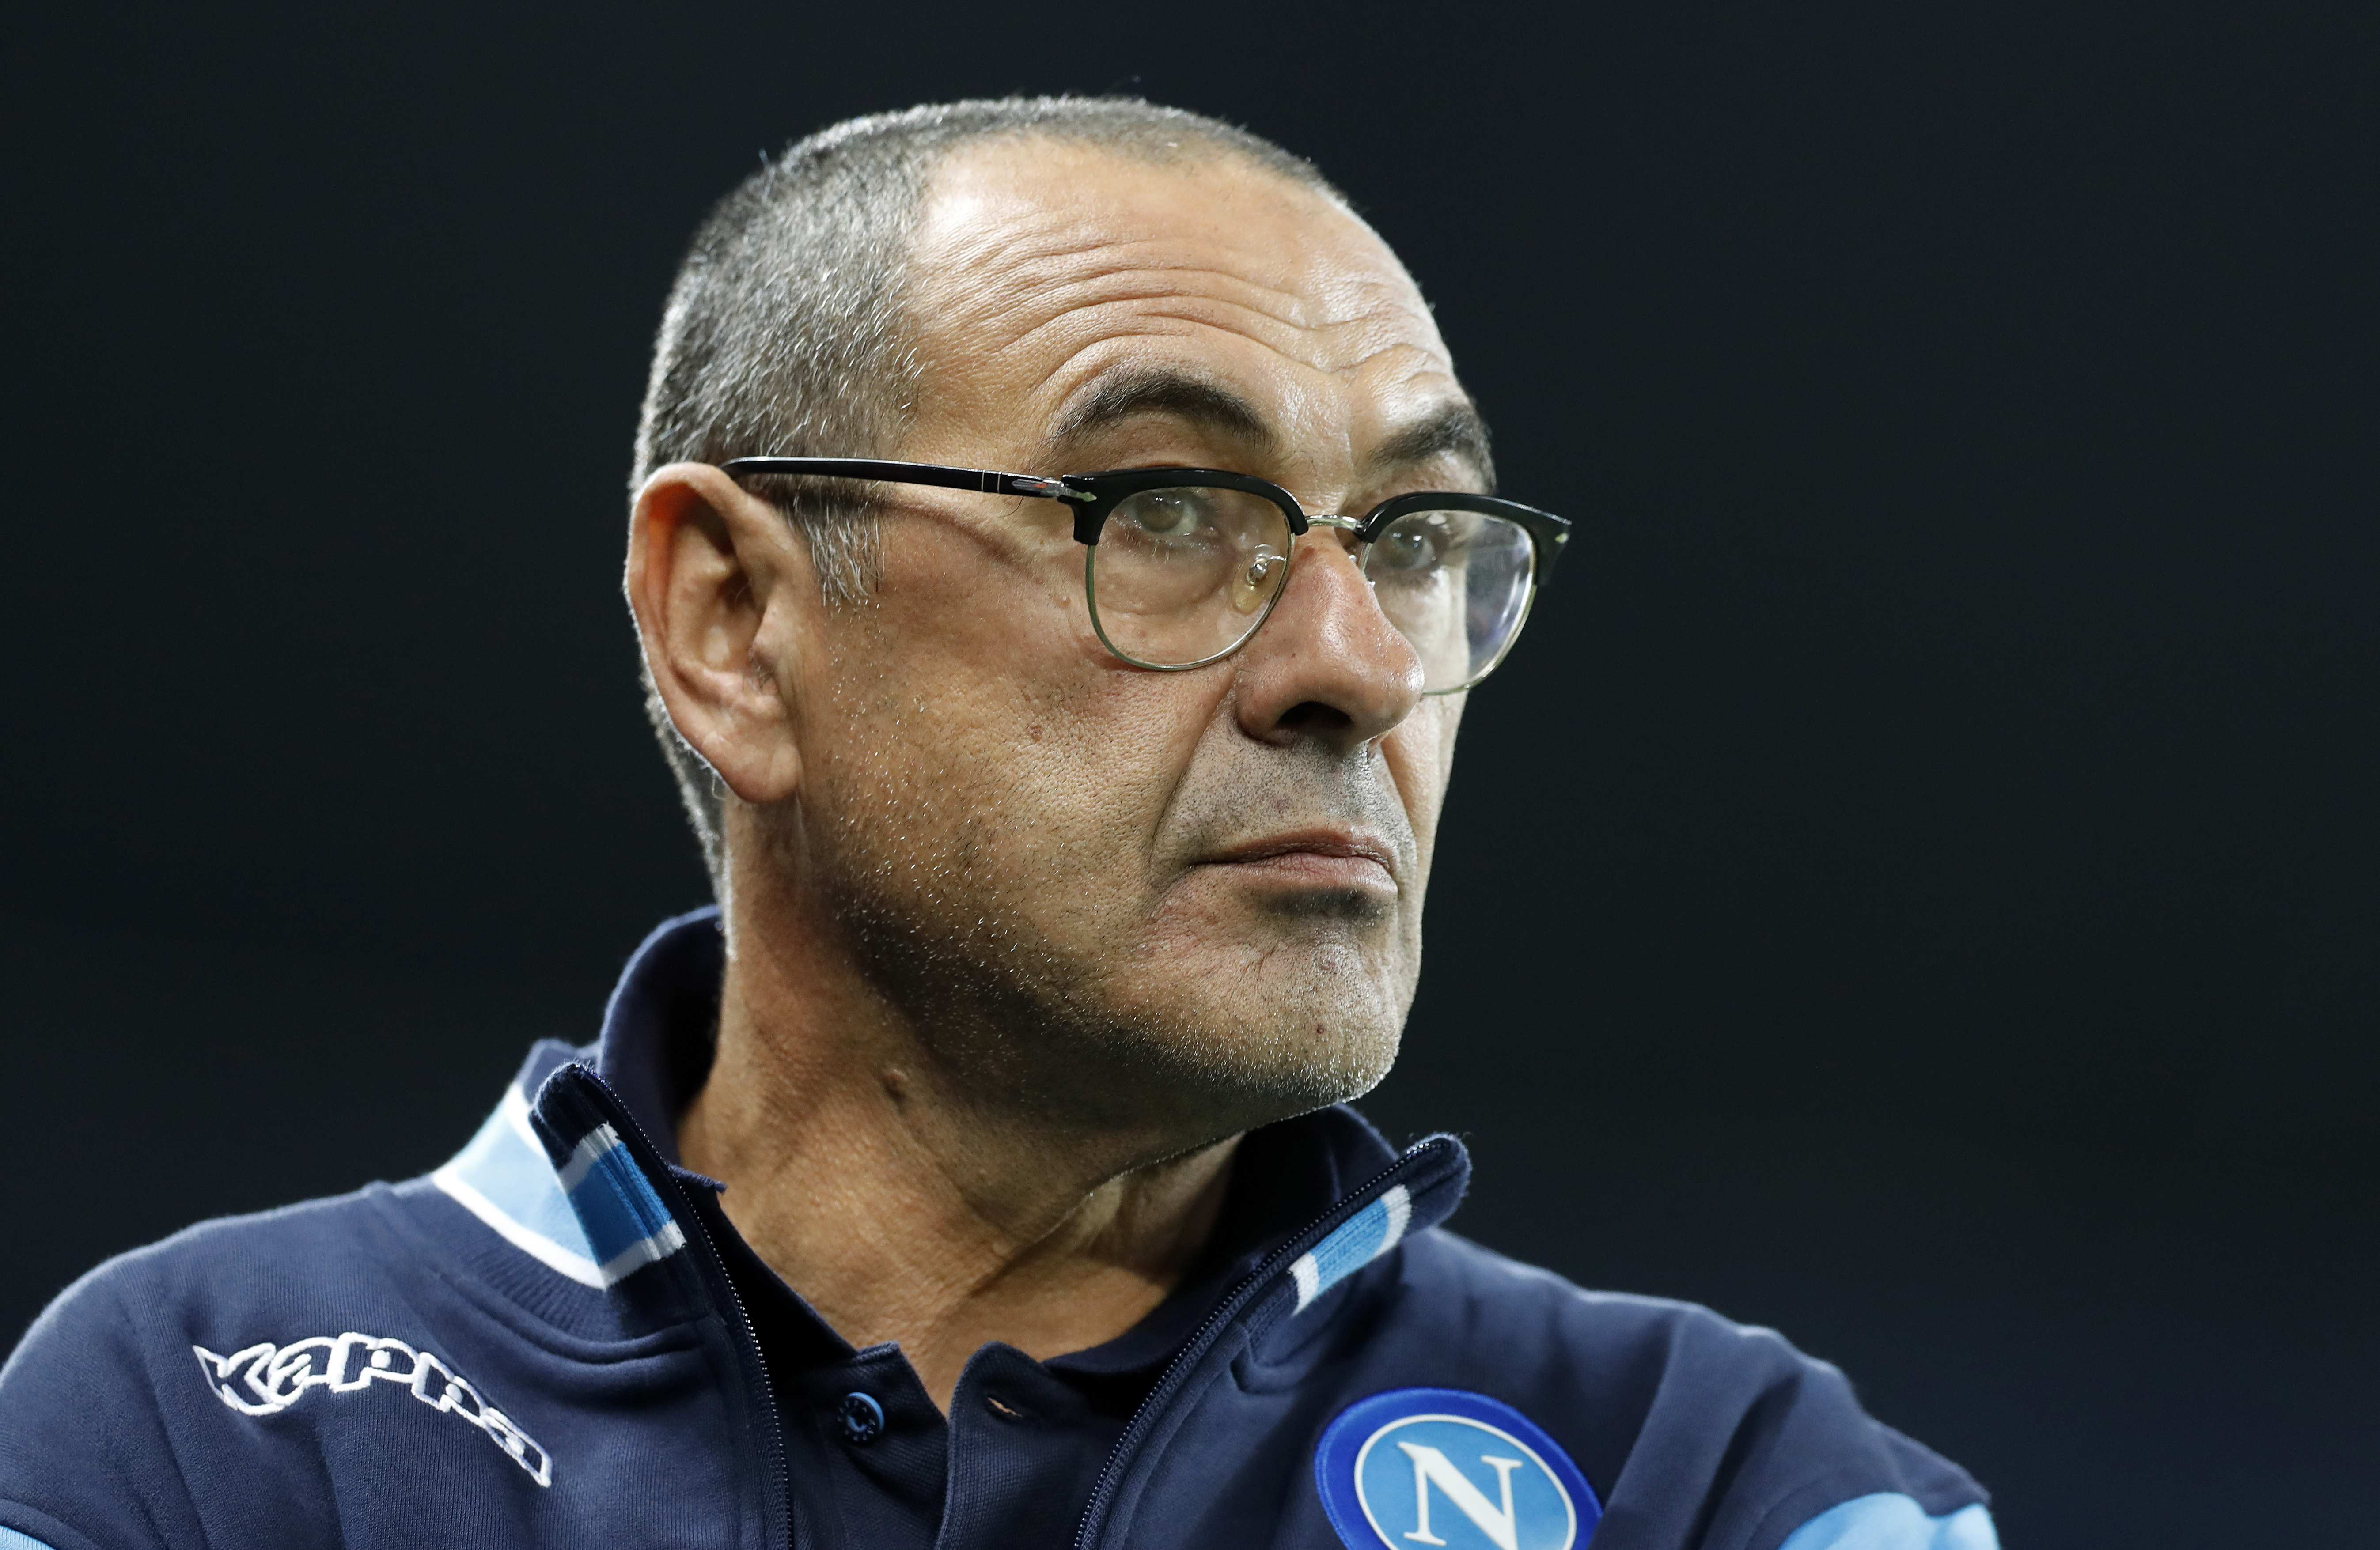 New Chelsea manager Maurizio Sarri